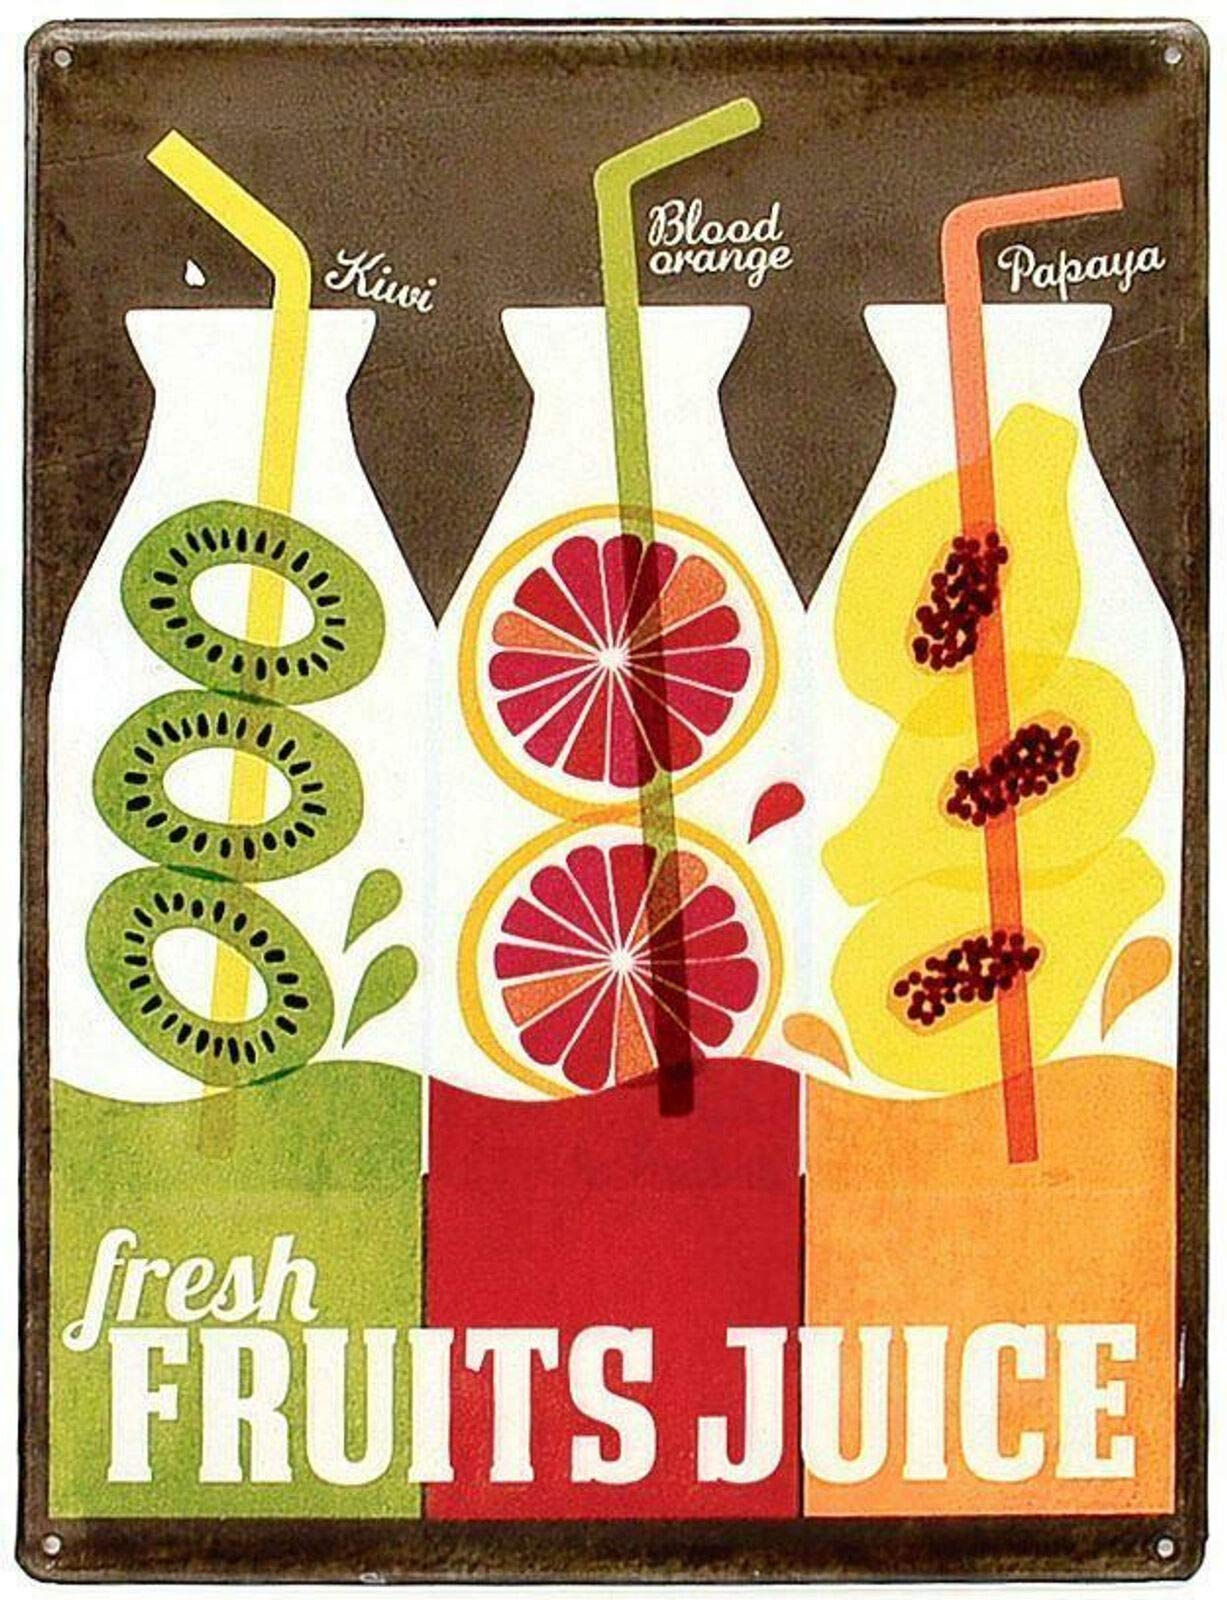 Kiwi Orange Papaya Fresh Fruits Juice Cafe Tin Sign Board Home Decoration Nostalgic Vintage Retro Poster Dimensions 20x30 cm